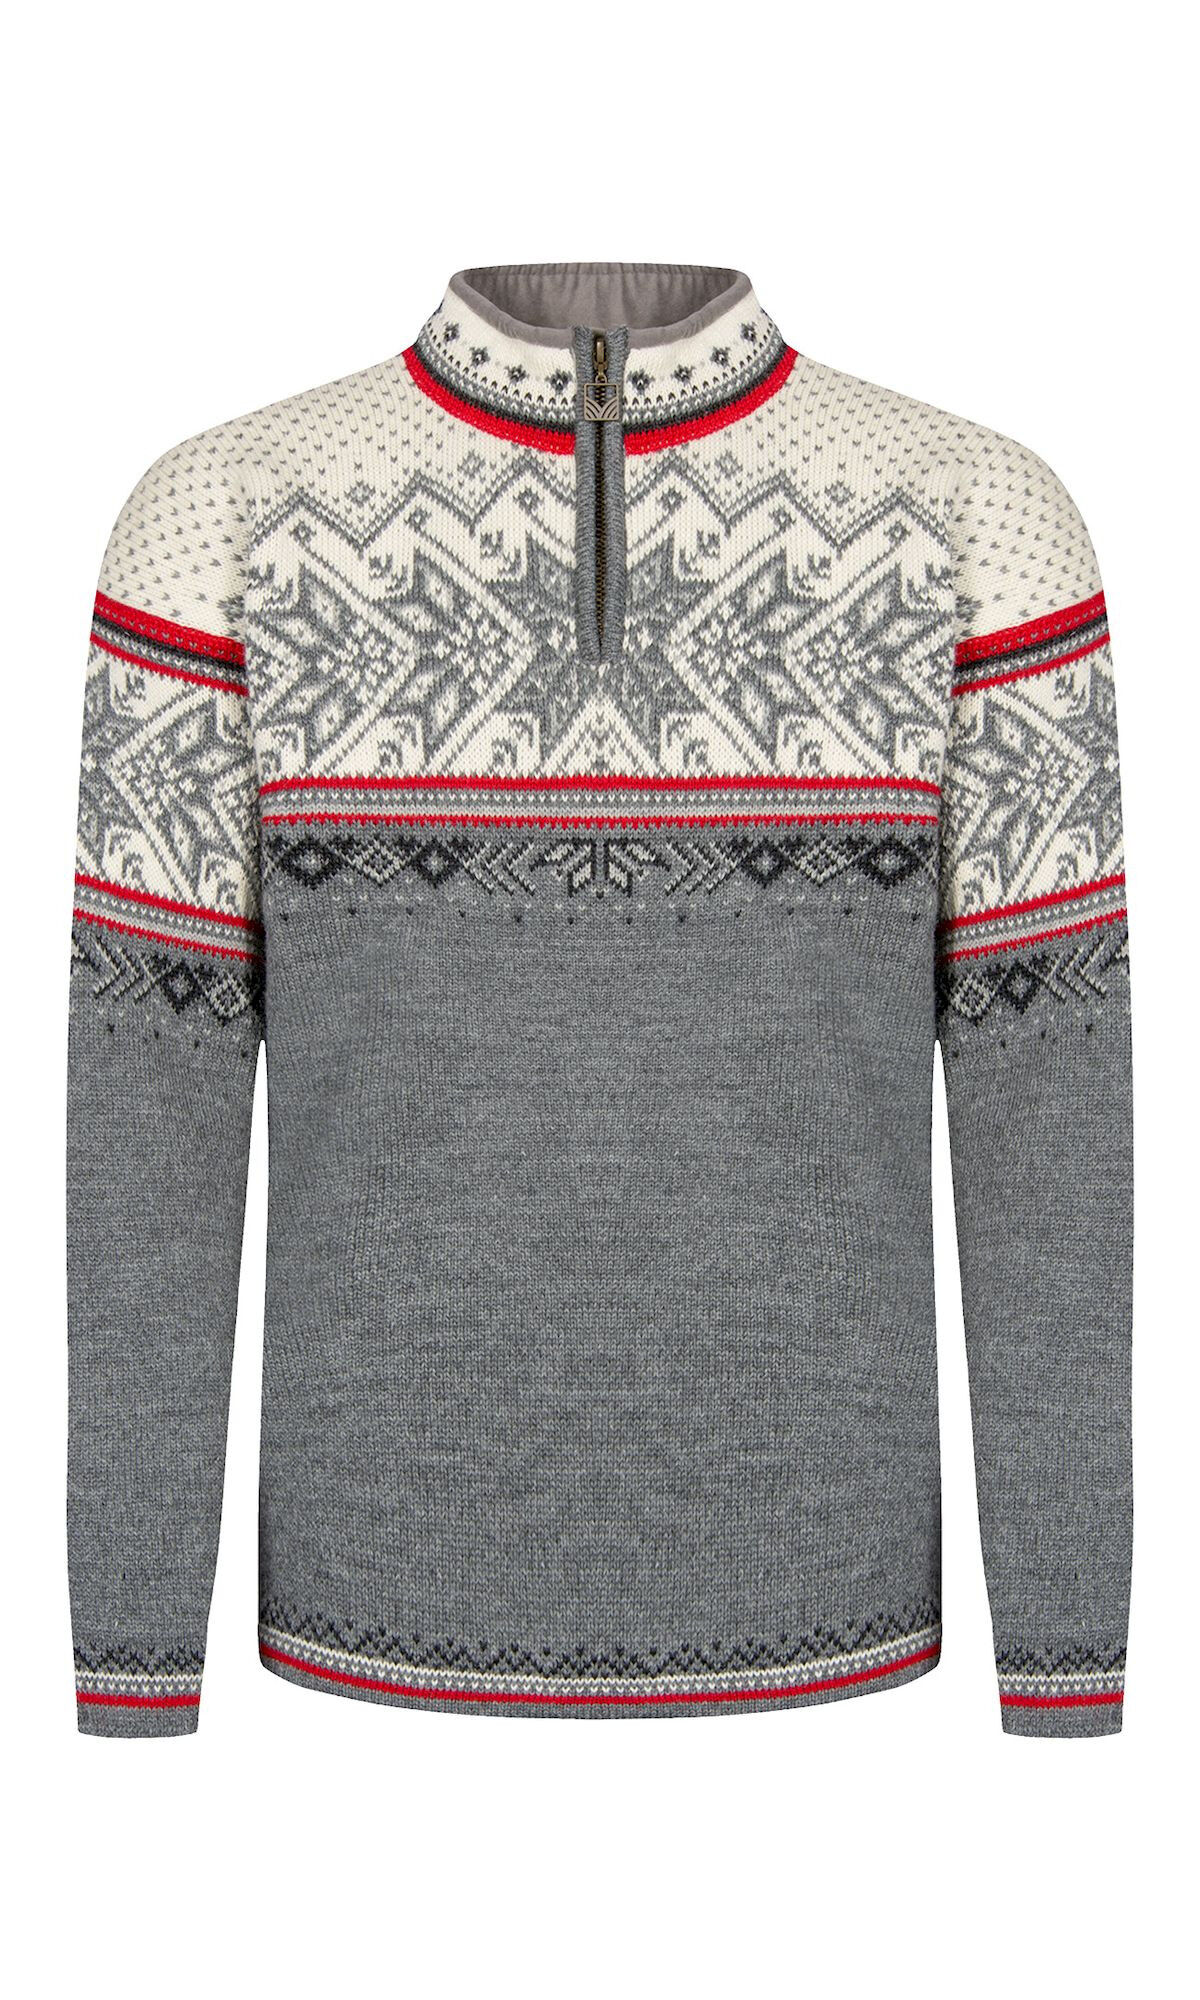 Dale of Norway Vail Sweater - Pullover in lana merino - Uomo | Hardloop